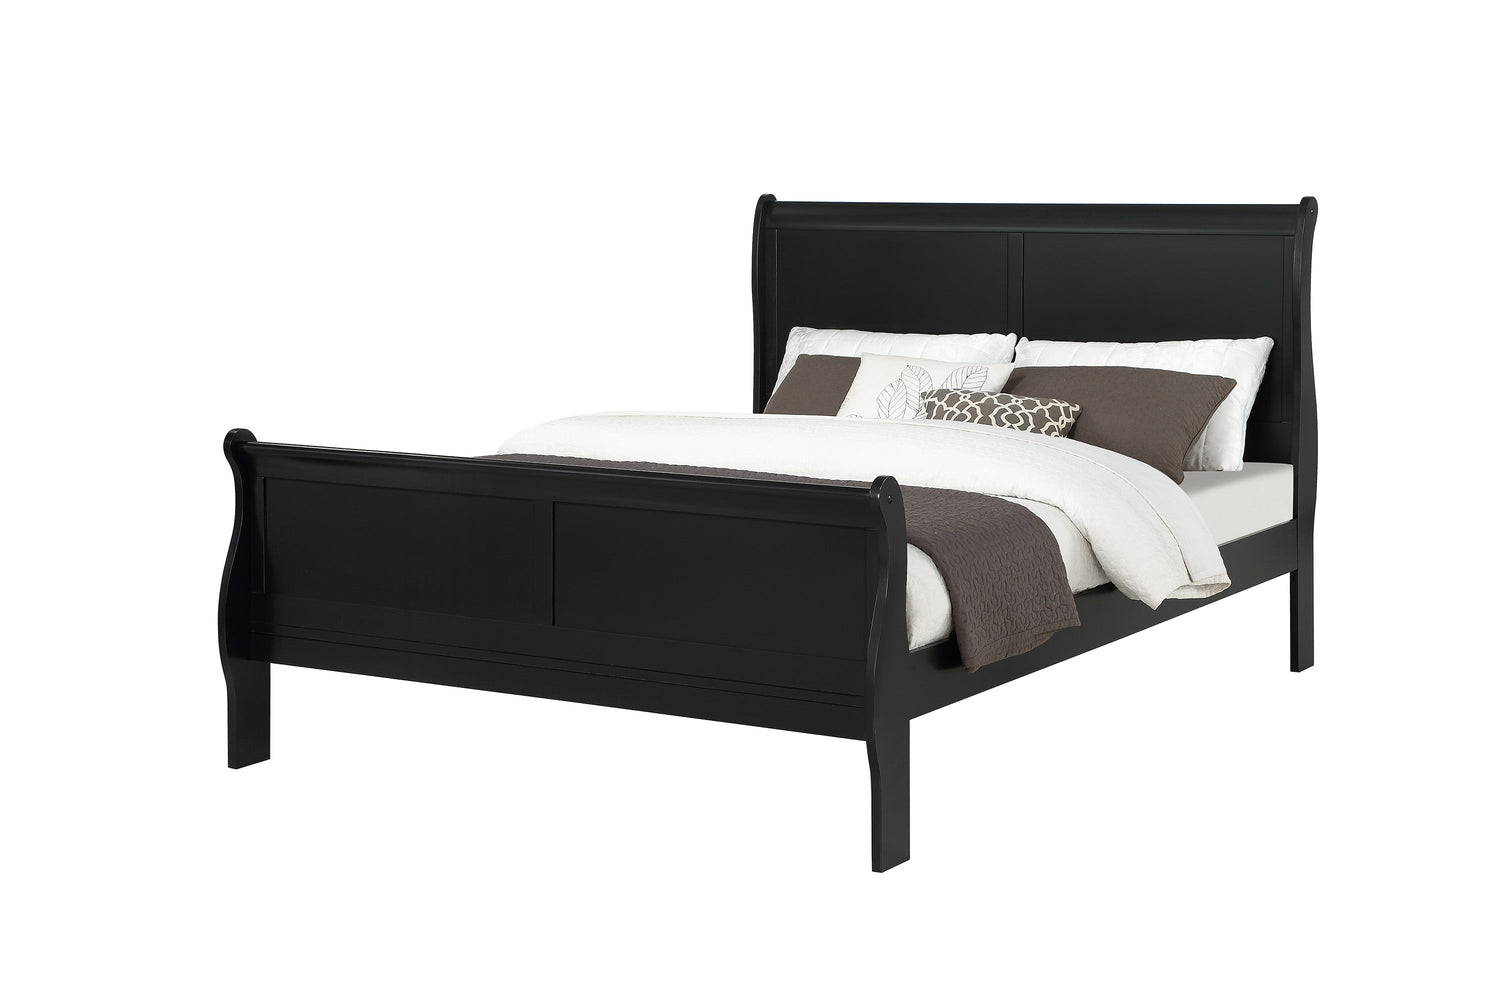 Louis Philip Black Sleigh Bedroom Set - SET | B3950-K-HBFB | B3950-K-RAIL | B3950-2 | B3950-4 - Bien Home Furniture &amp; Electronics